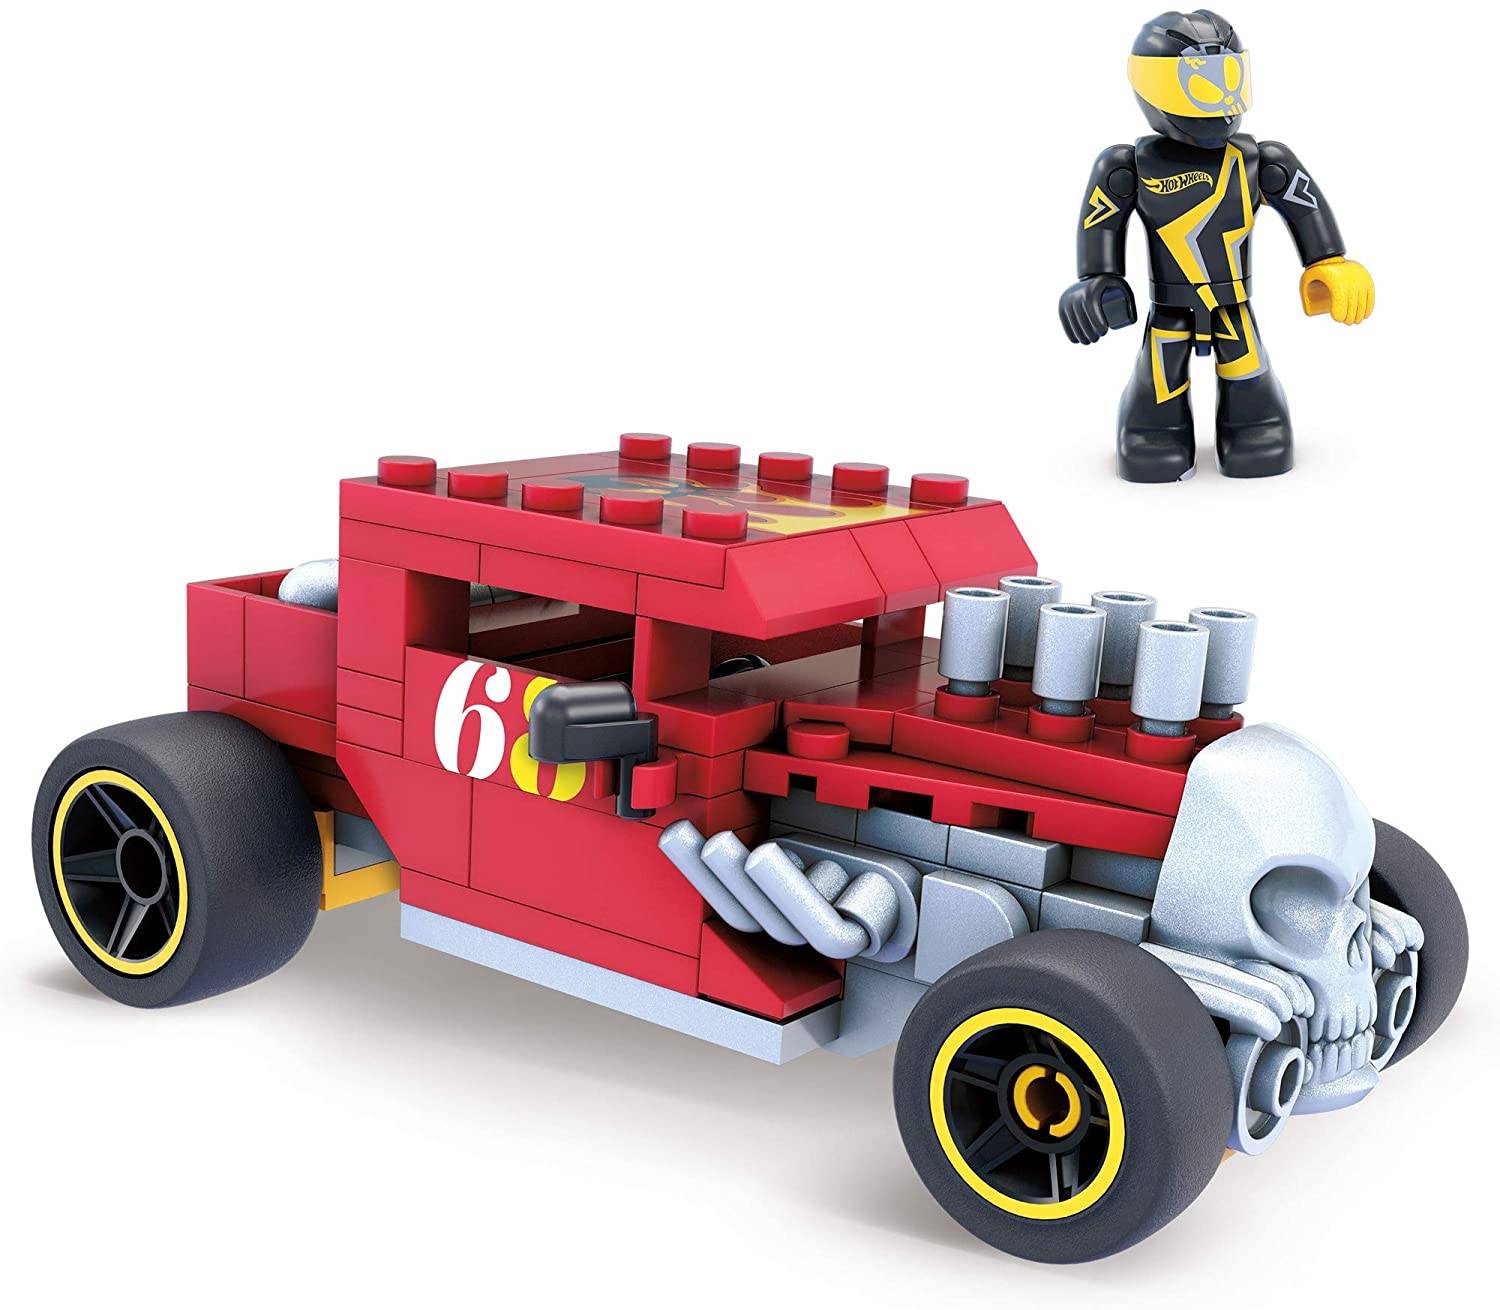 Mega Construx Hot Wheels Bone Shaker Construction Set, Building Toys for Kids 5 Years+